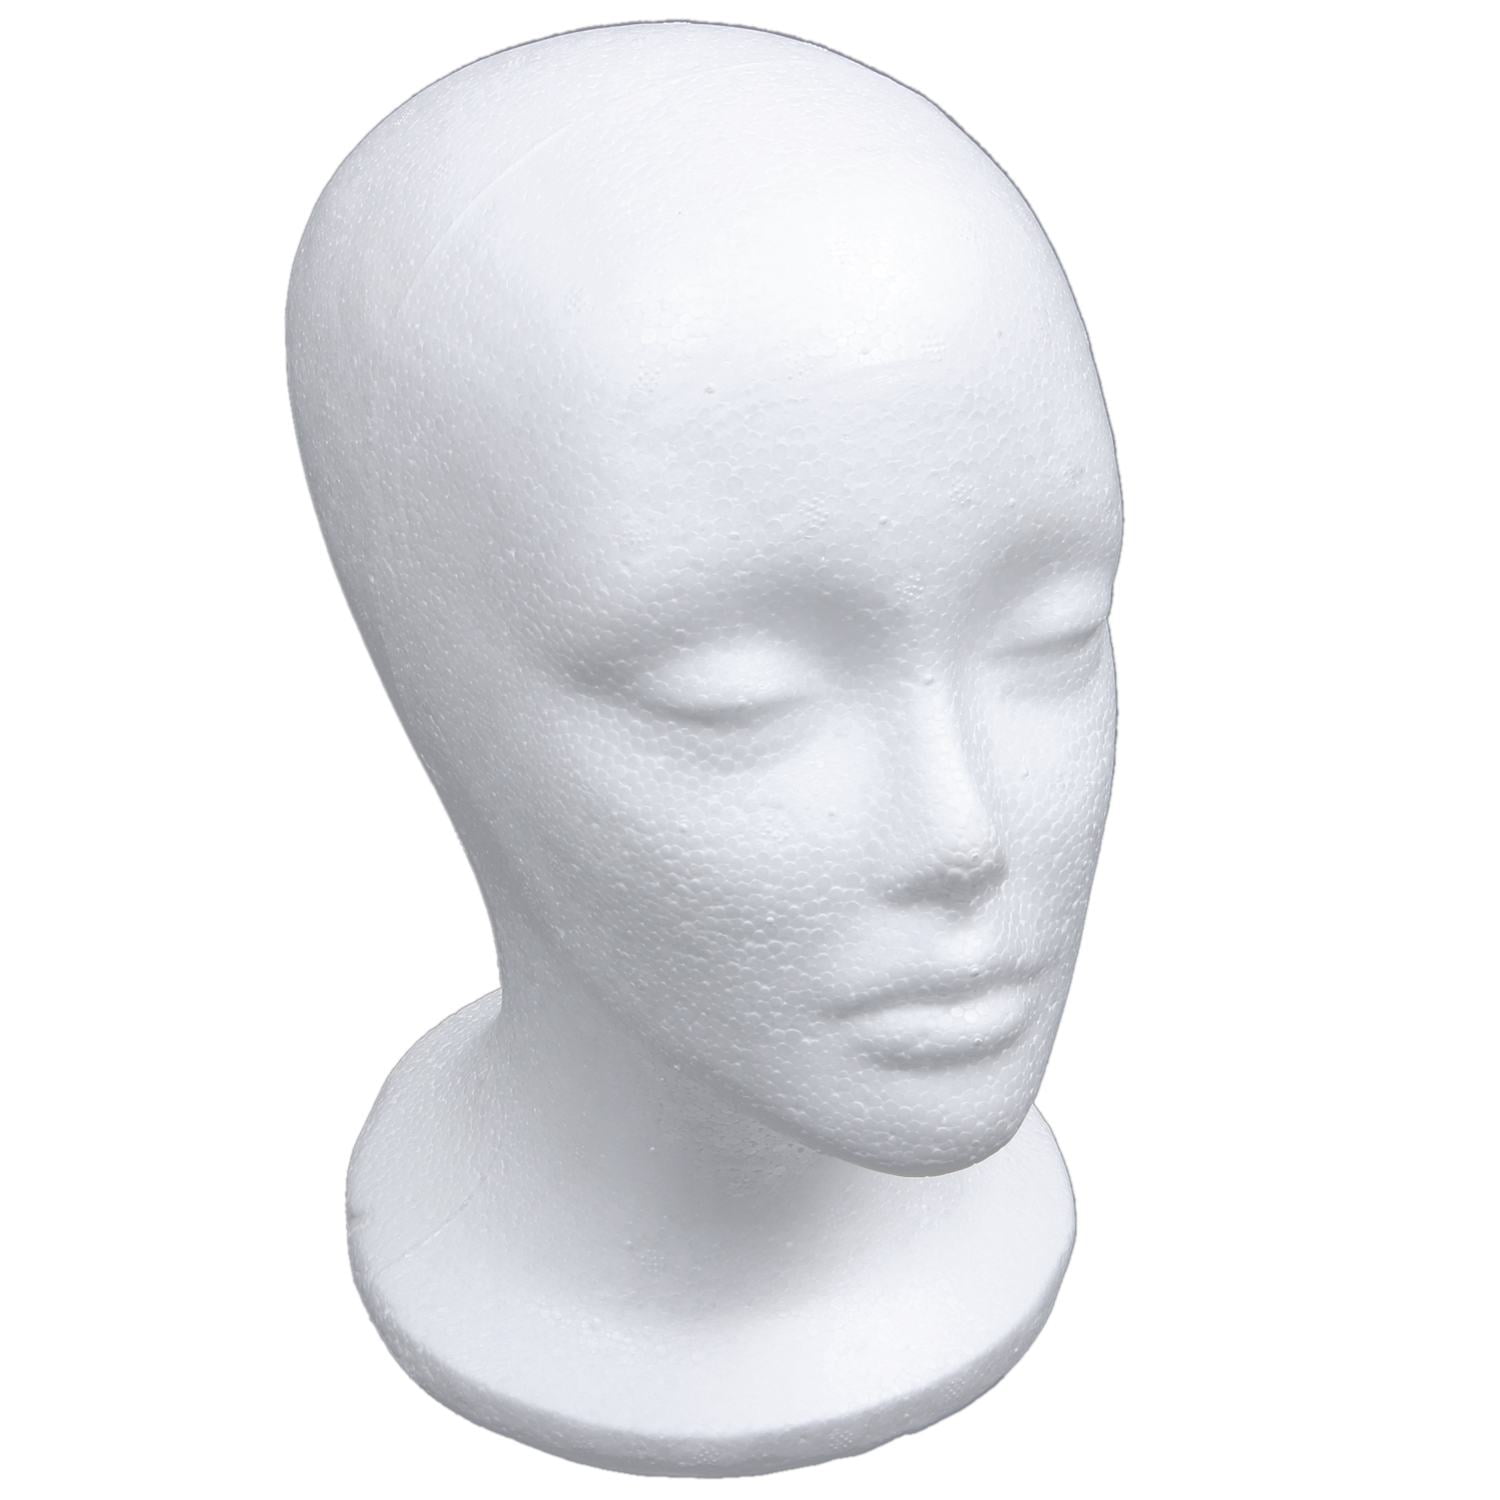 New best female STYROFOAM MANIKIN head display height 53cm Head Circumference 